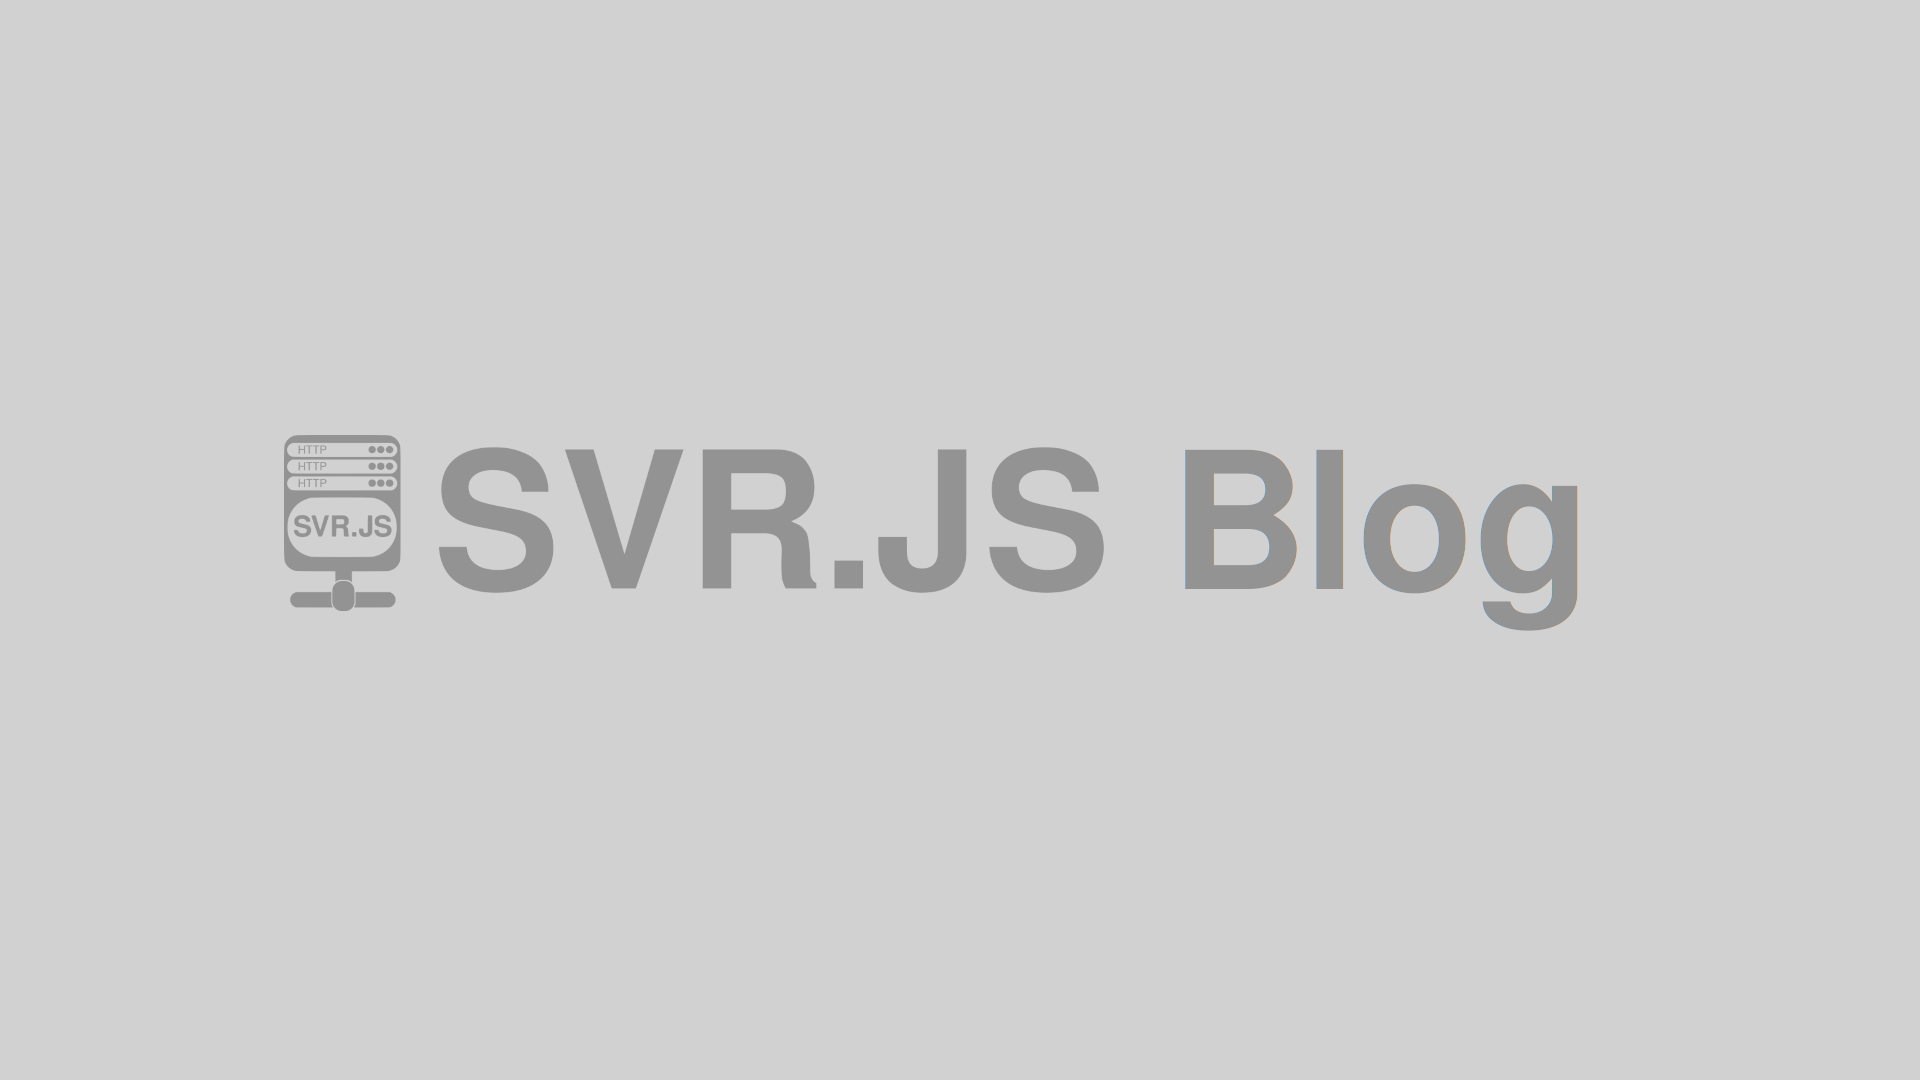 SVR.JS can now do SCGI!